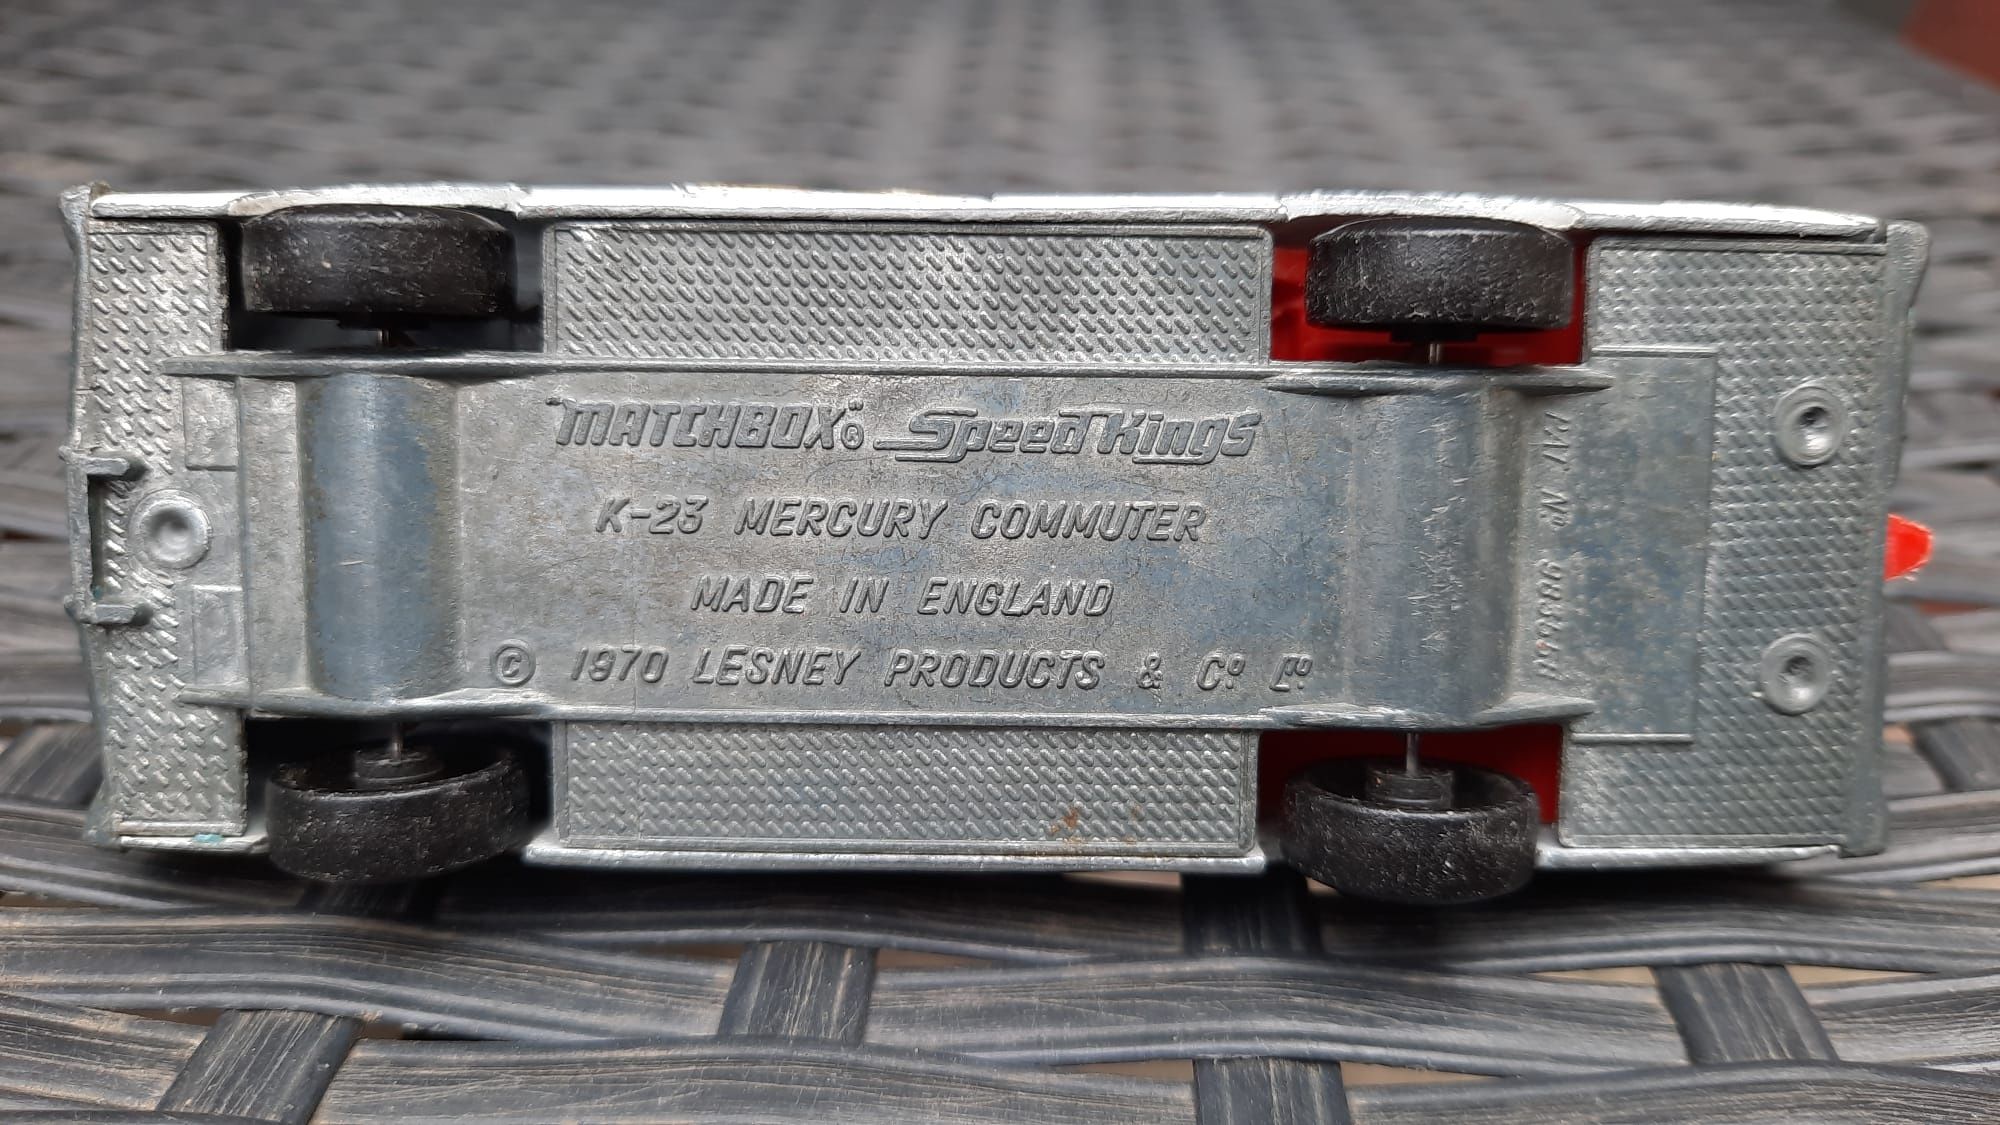 Macheta metalica matchbox made in england scara 1/43 veche de colectie